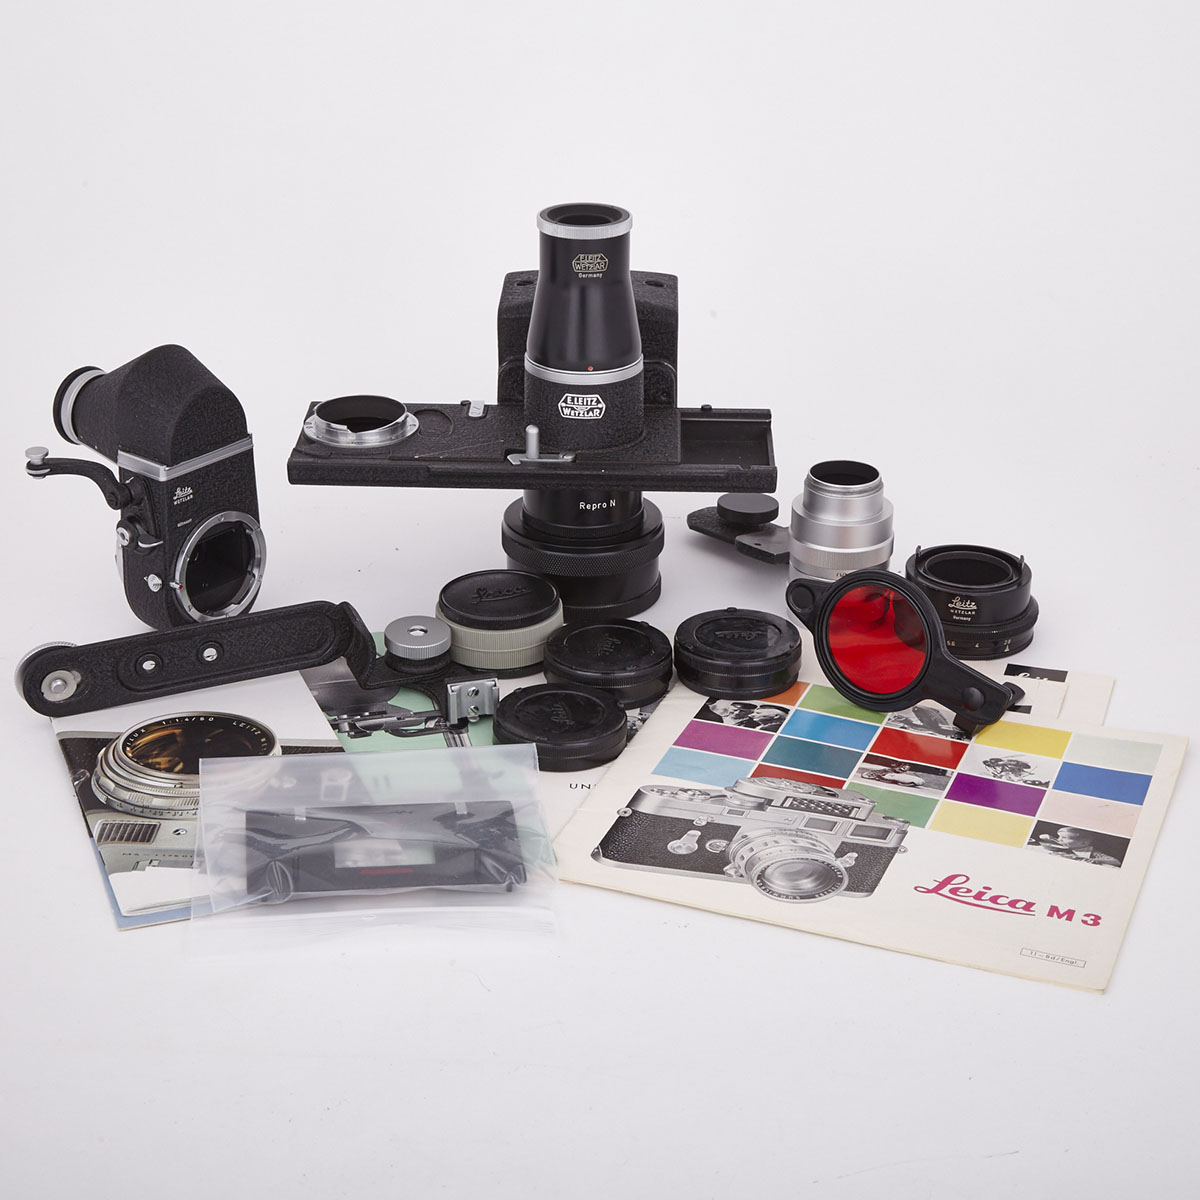 Lot of Leica Camera Accessories, c.1960-1970